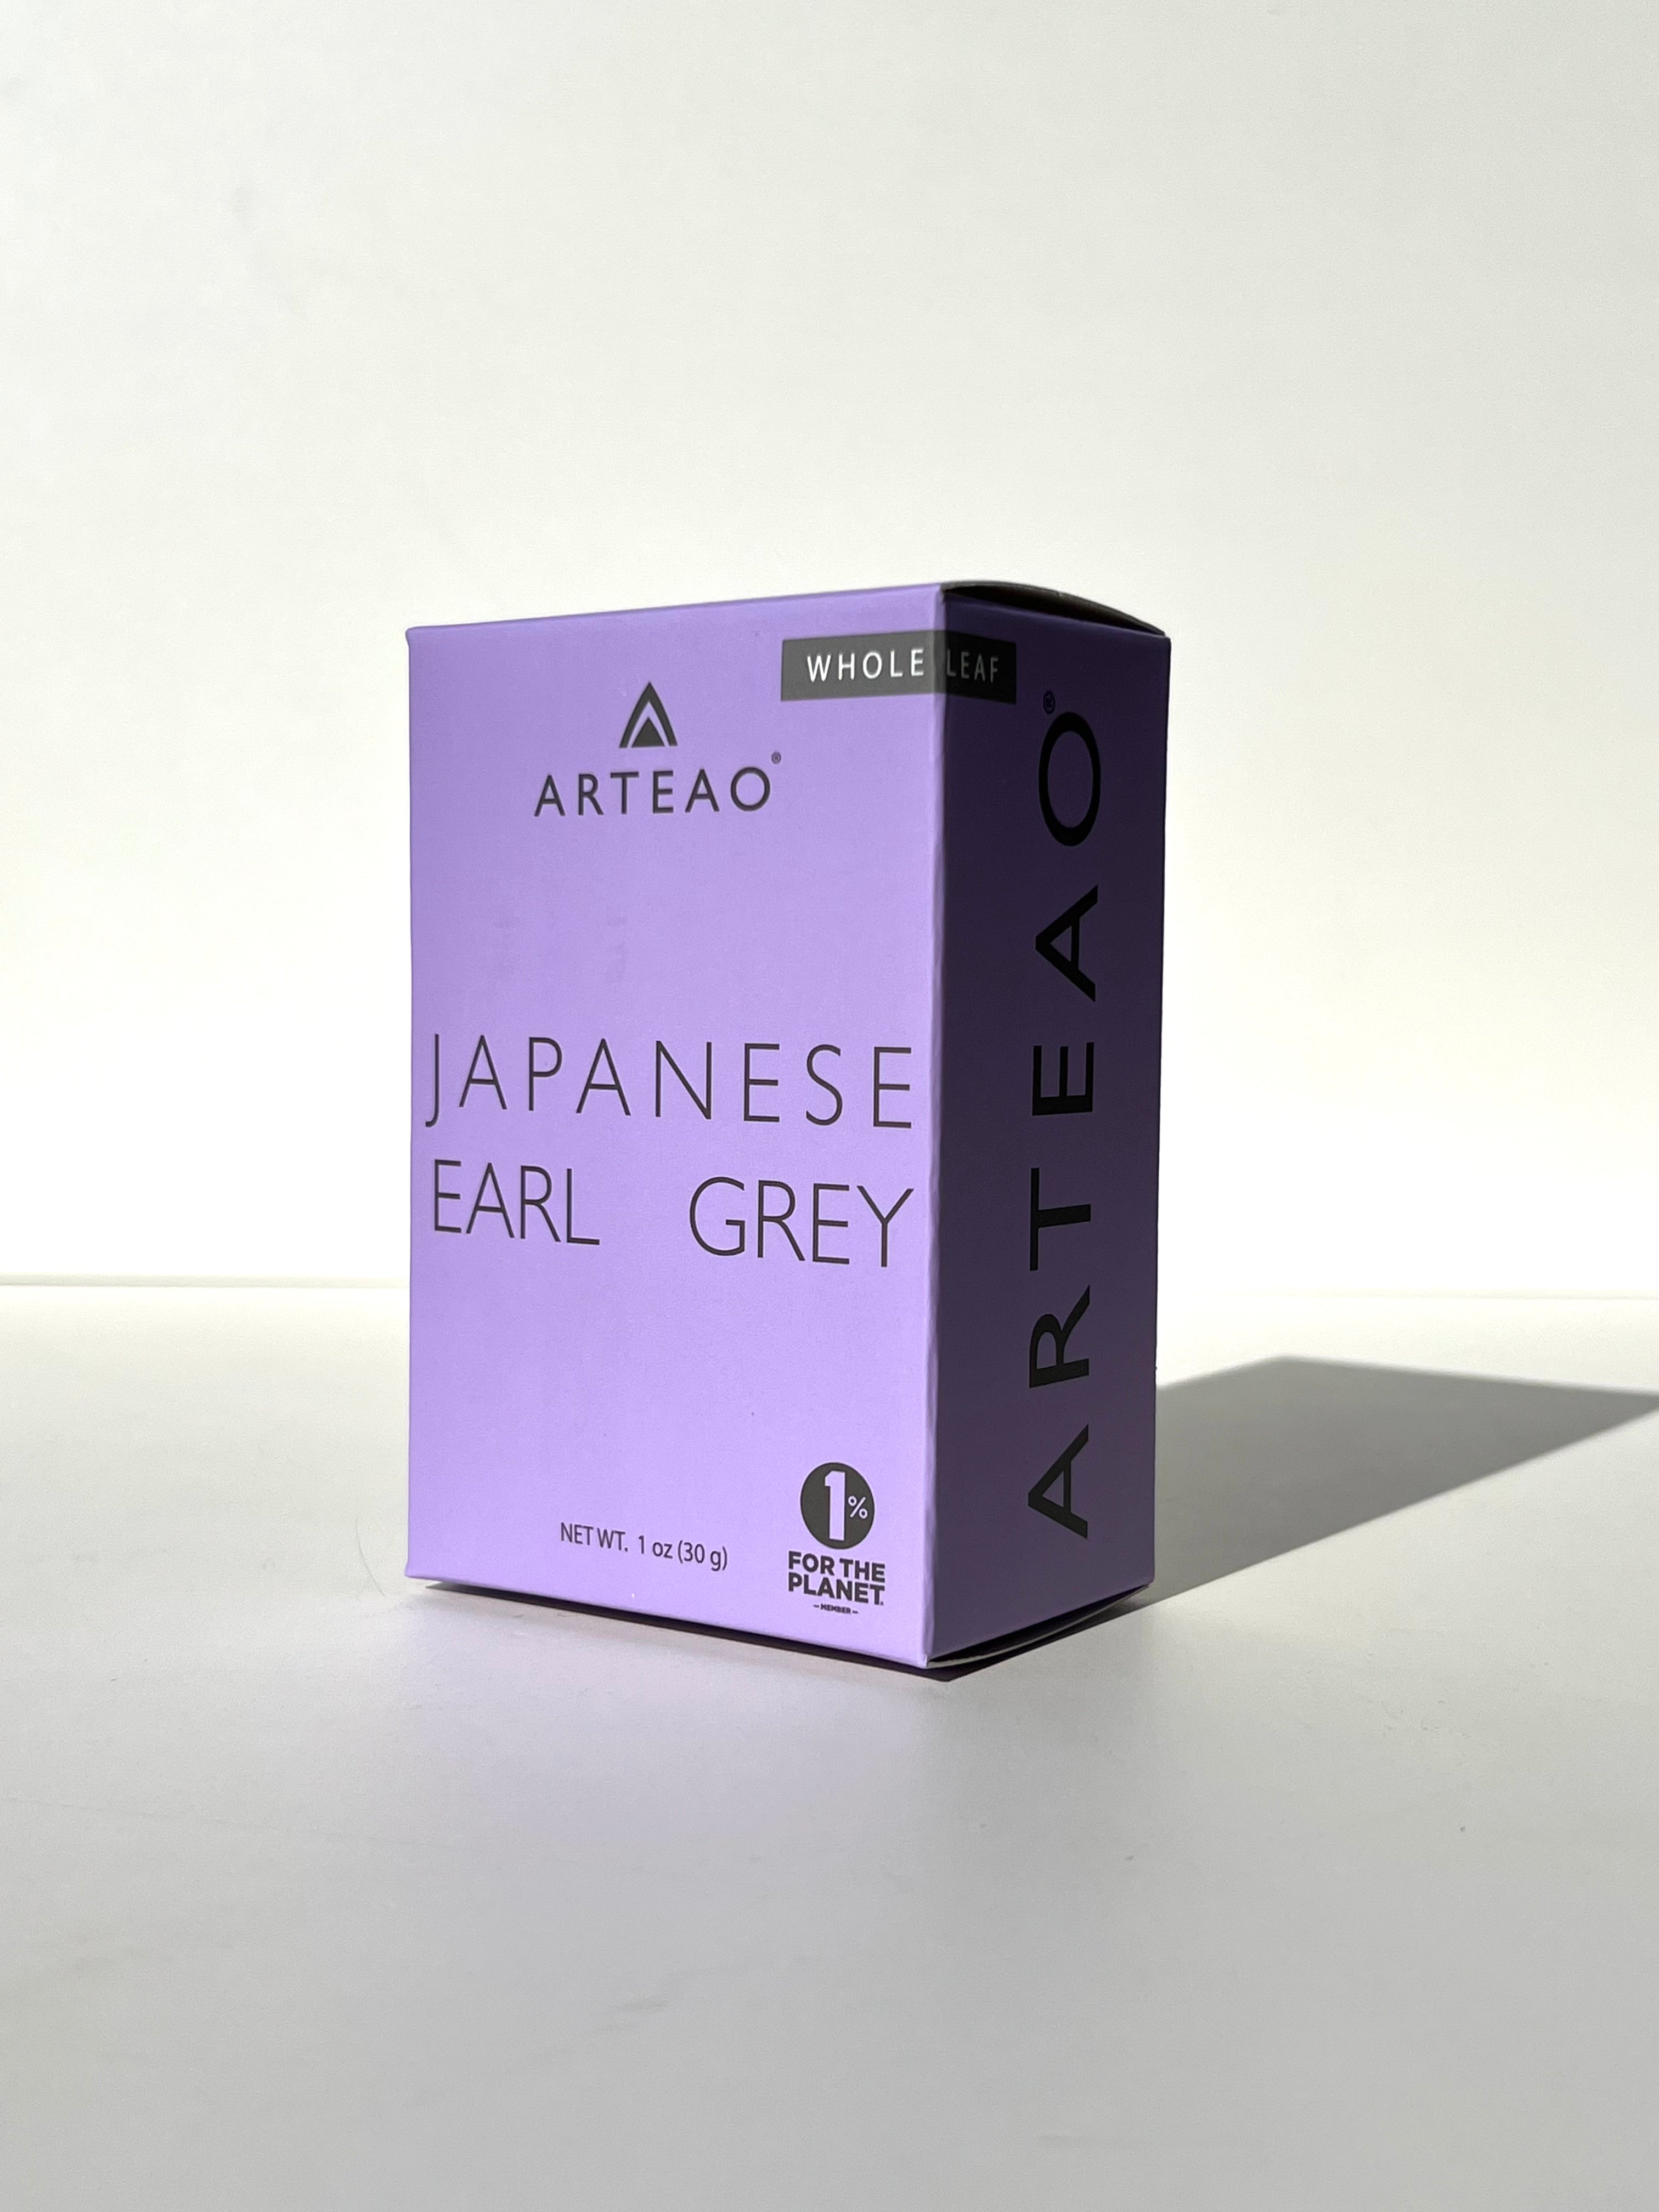 Japanese Earl Grey